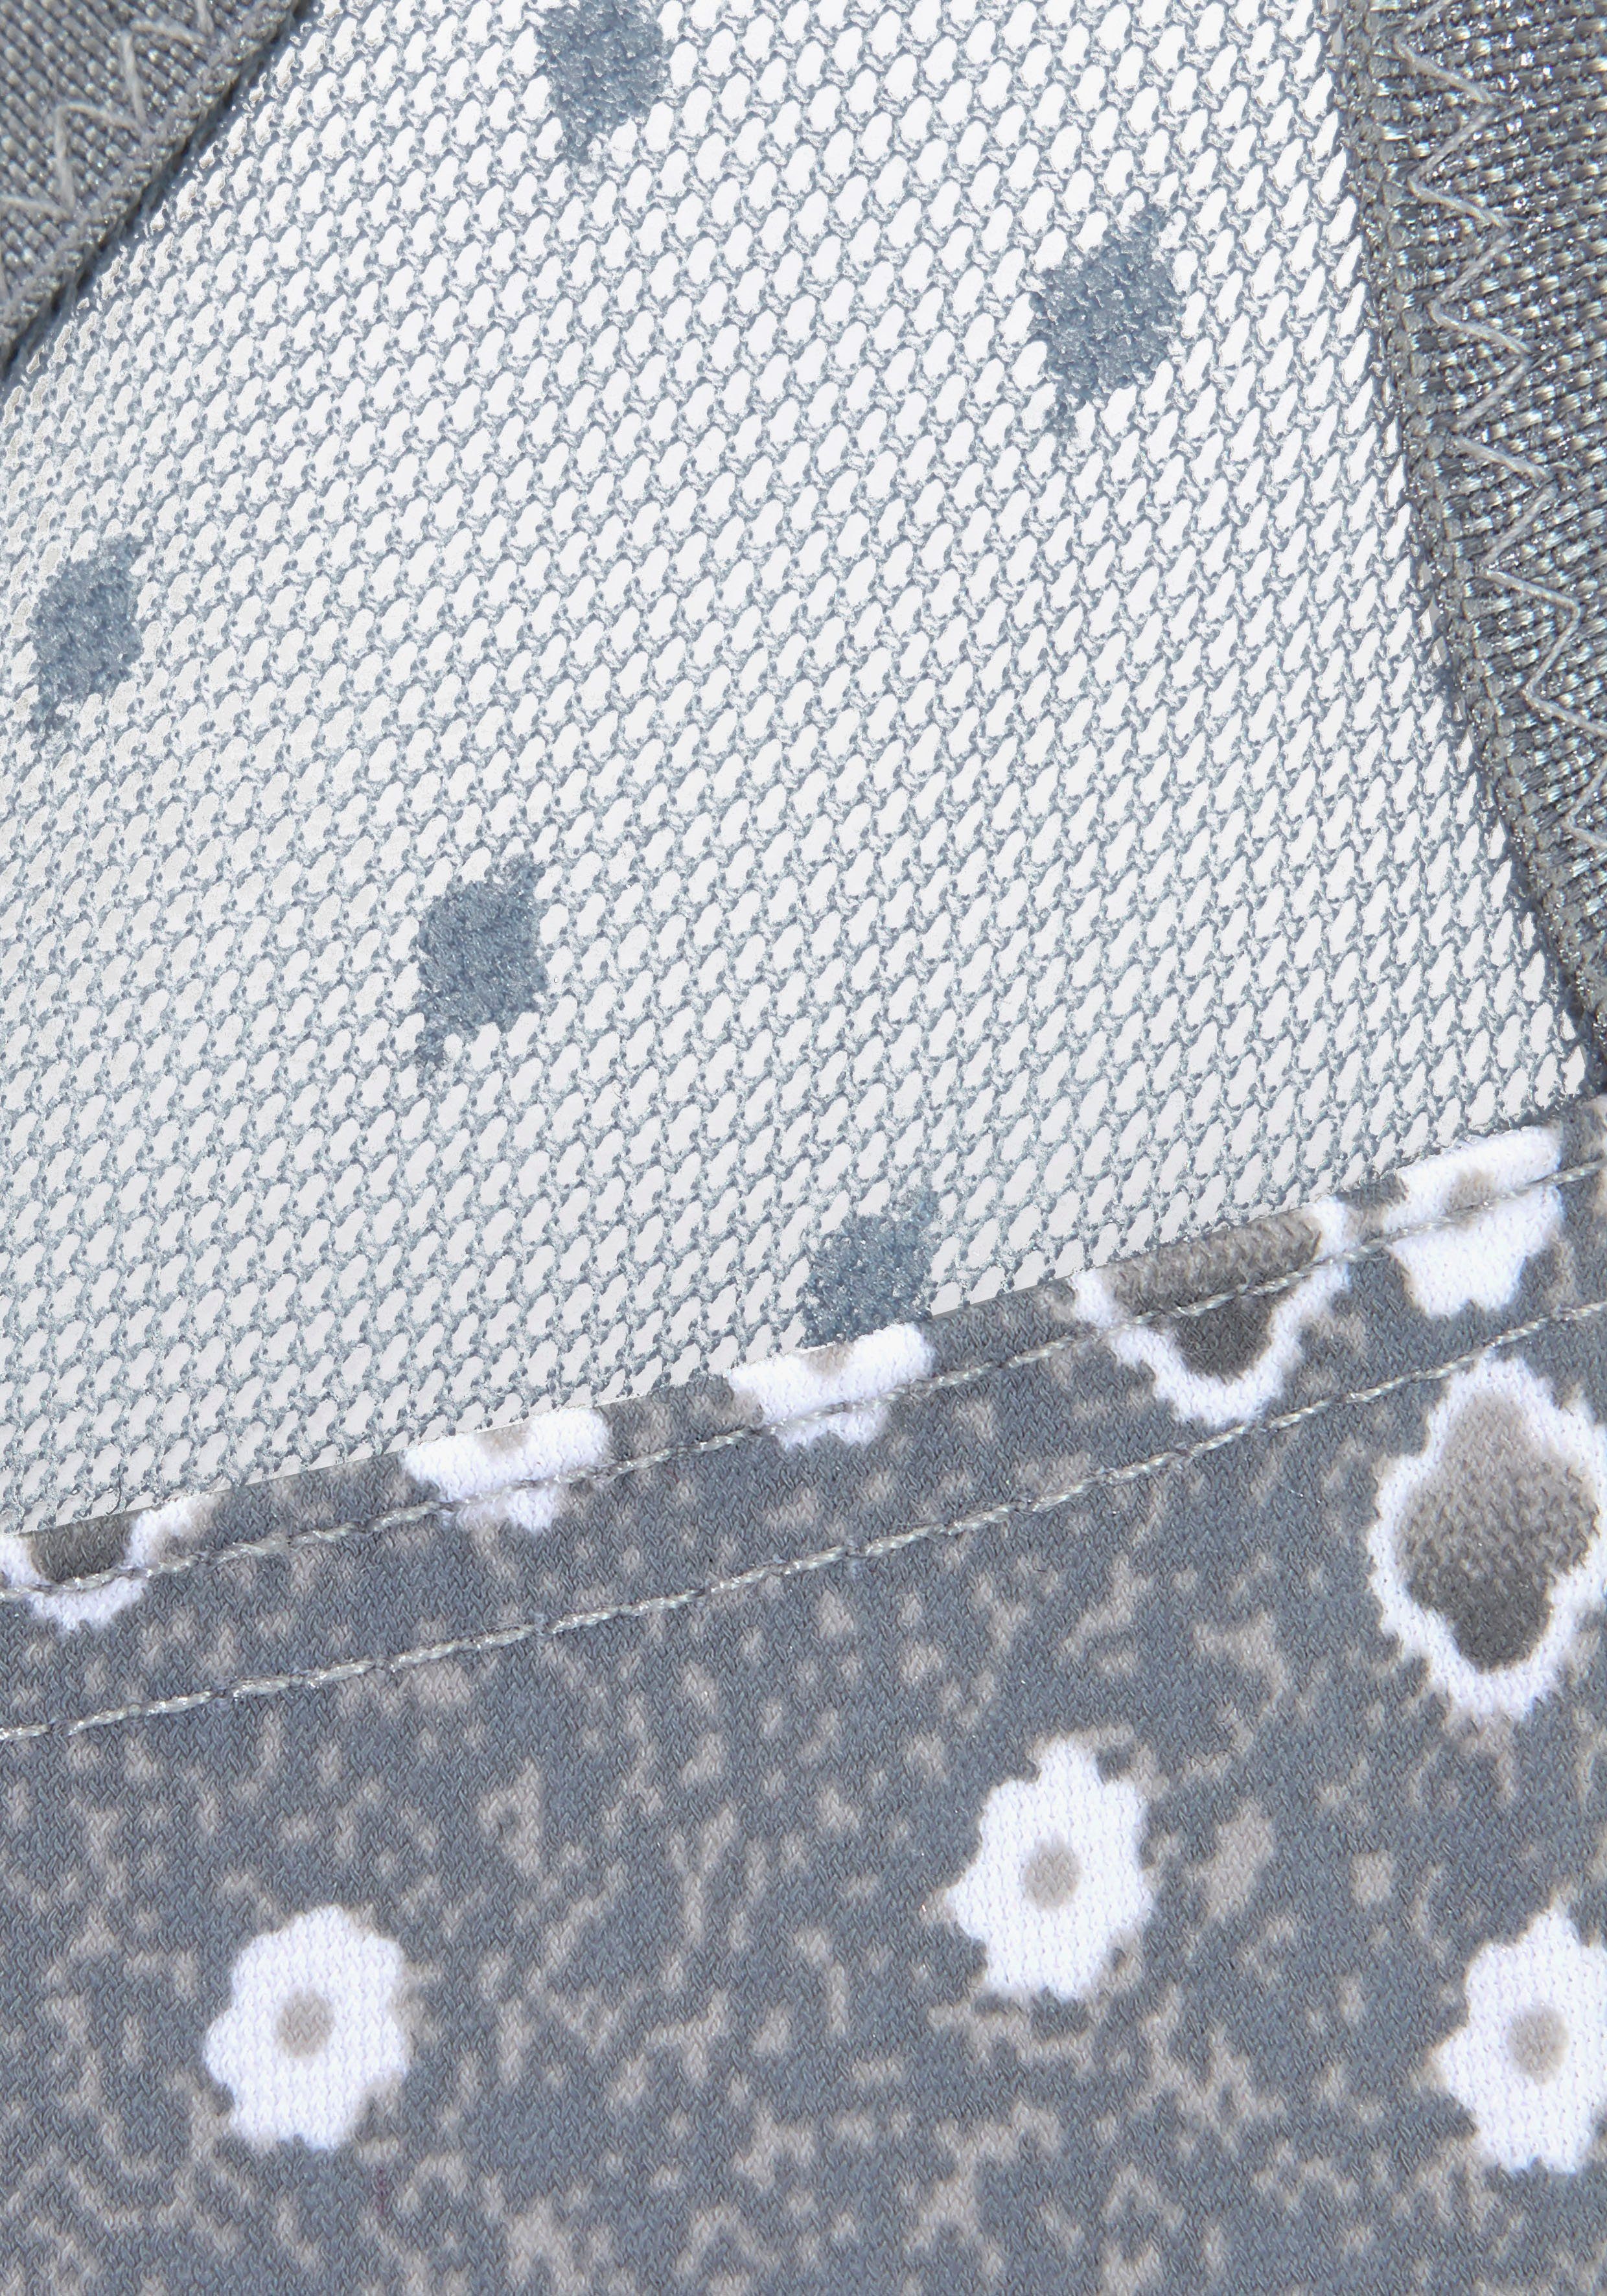 Nuance Minimizer-BH mit Bügel und Obercup, Tüll im Basic grau-bedruckt transparentem leicht Dessous